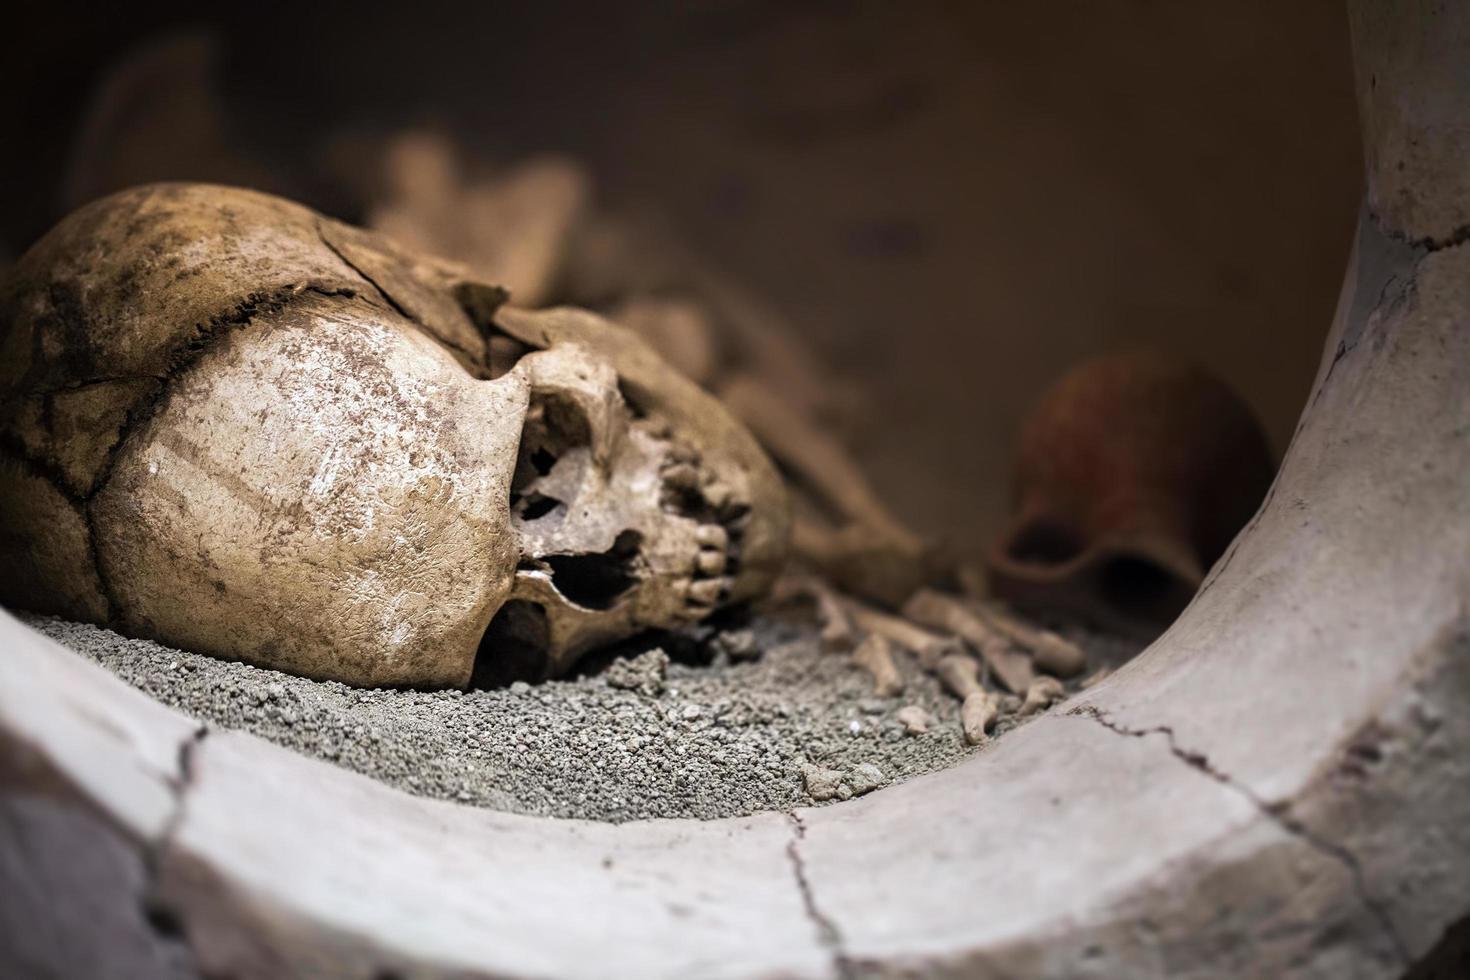 Human Death Skeleton Bones and Skull photo